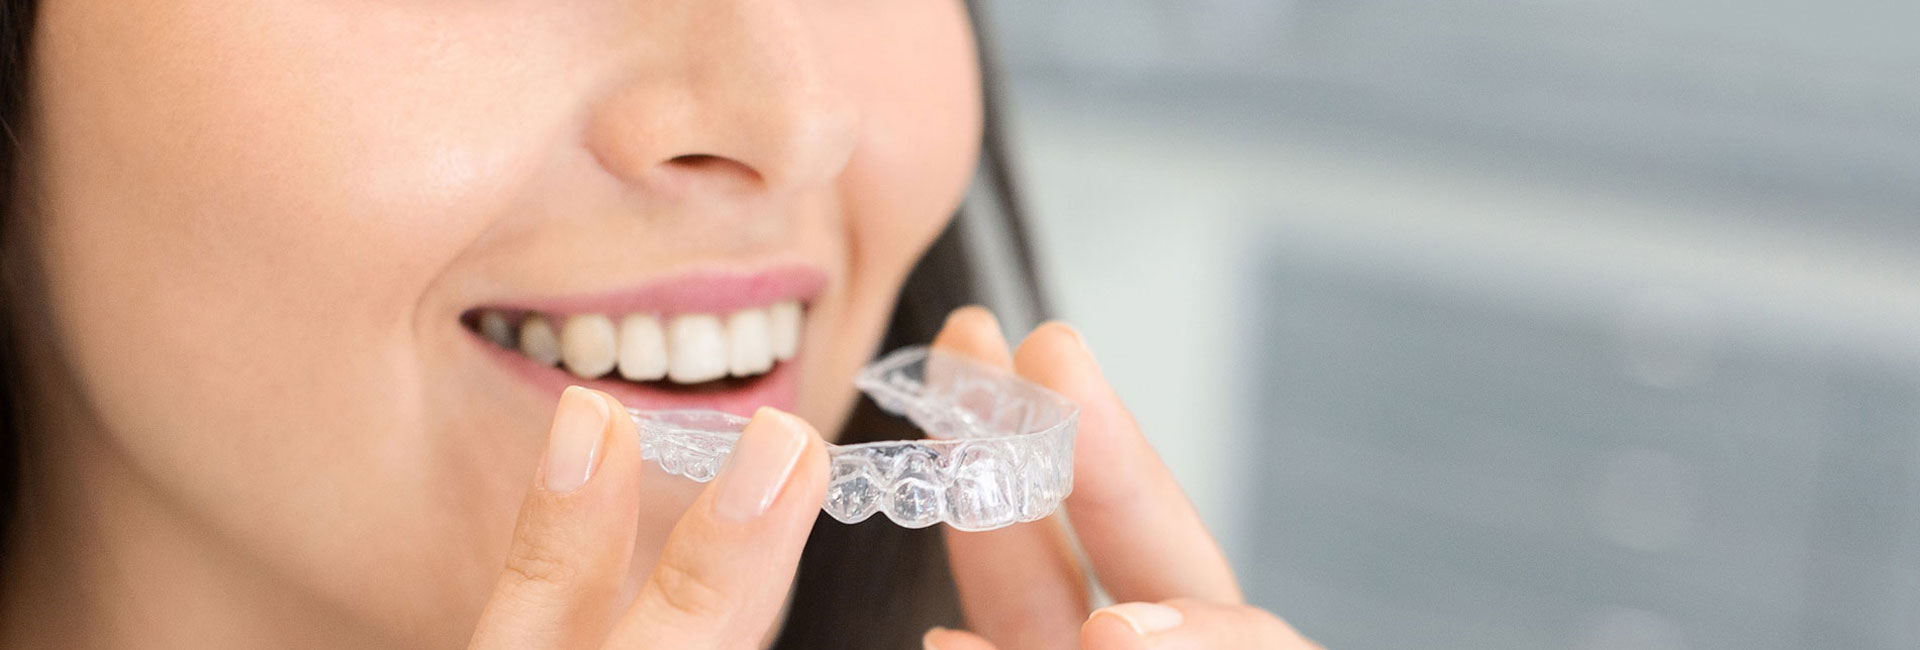 Transparente Invisalign Aligner Schienen fast unsichtbare & herausnehmbare Zahnspange